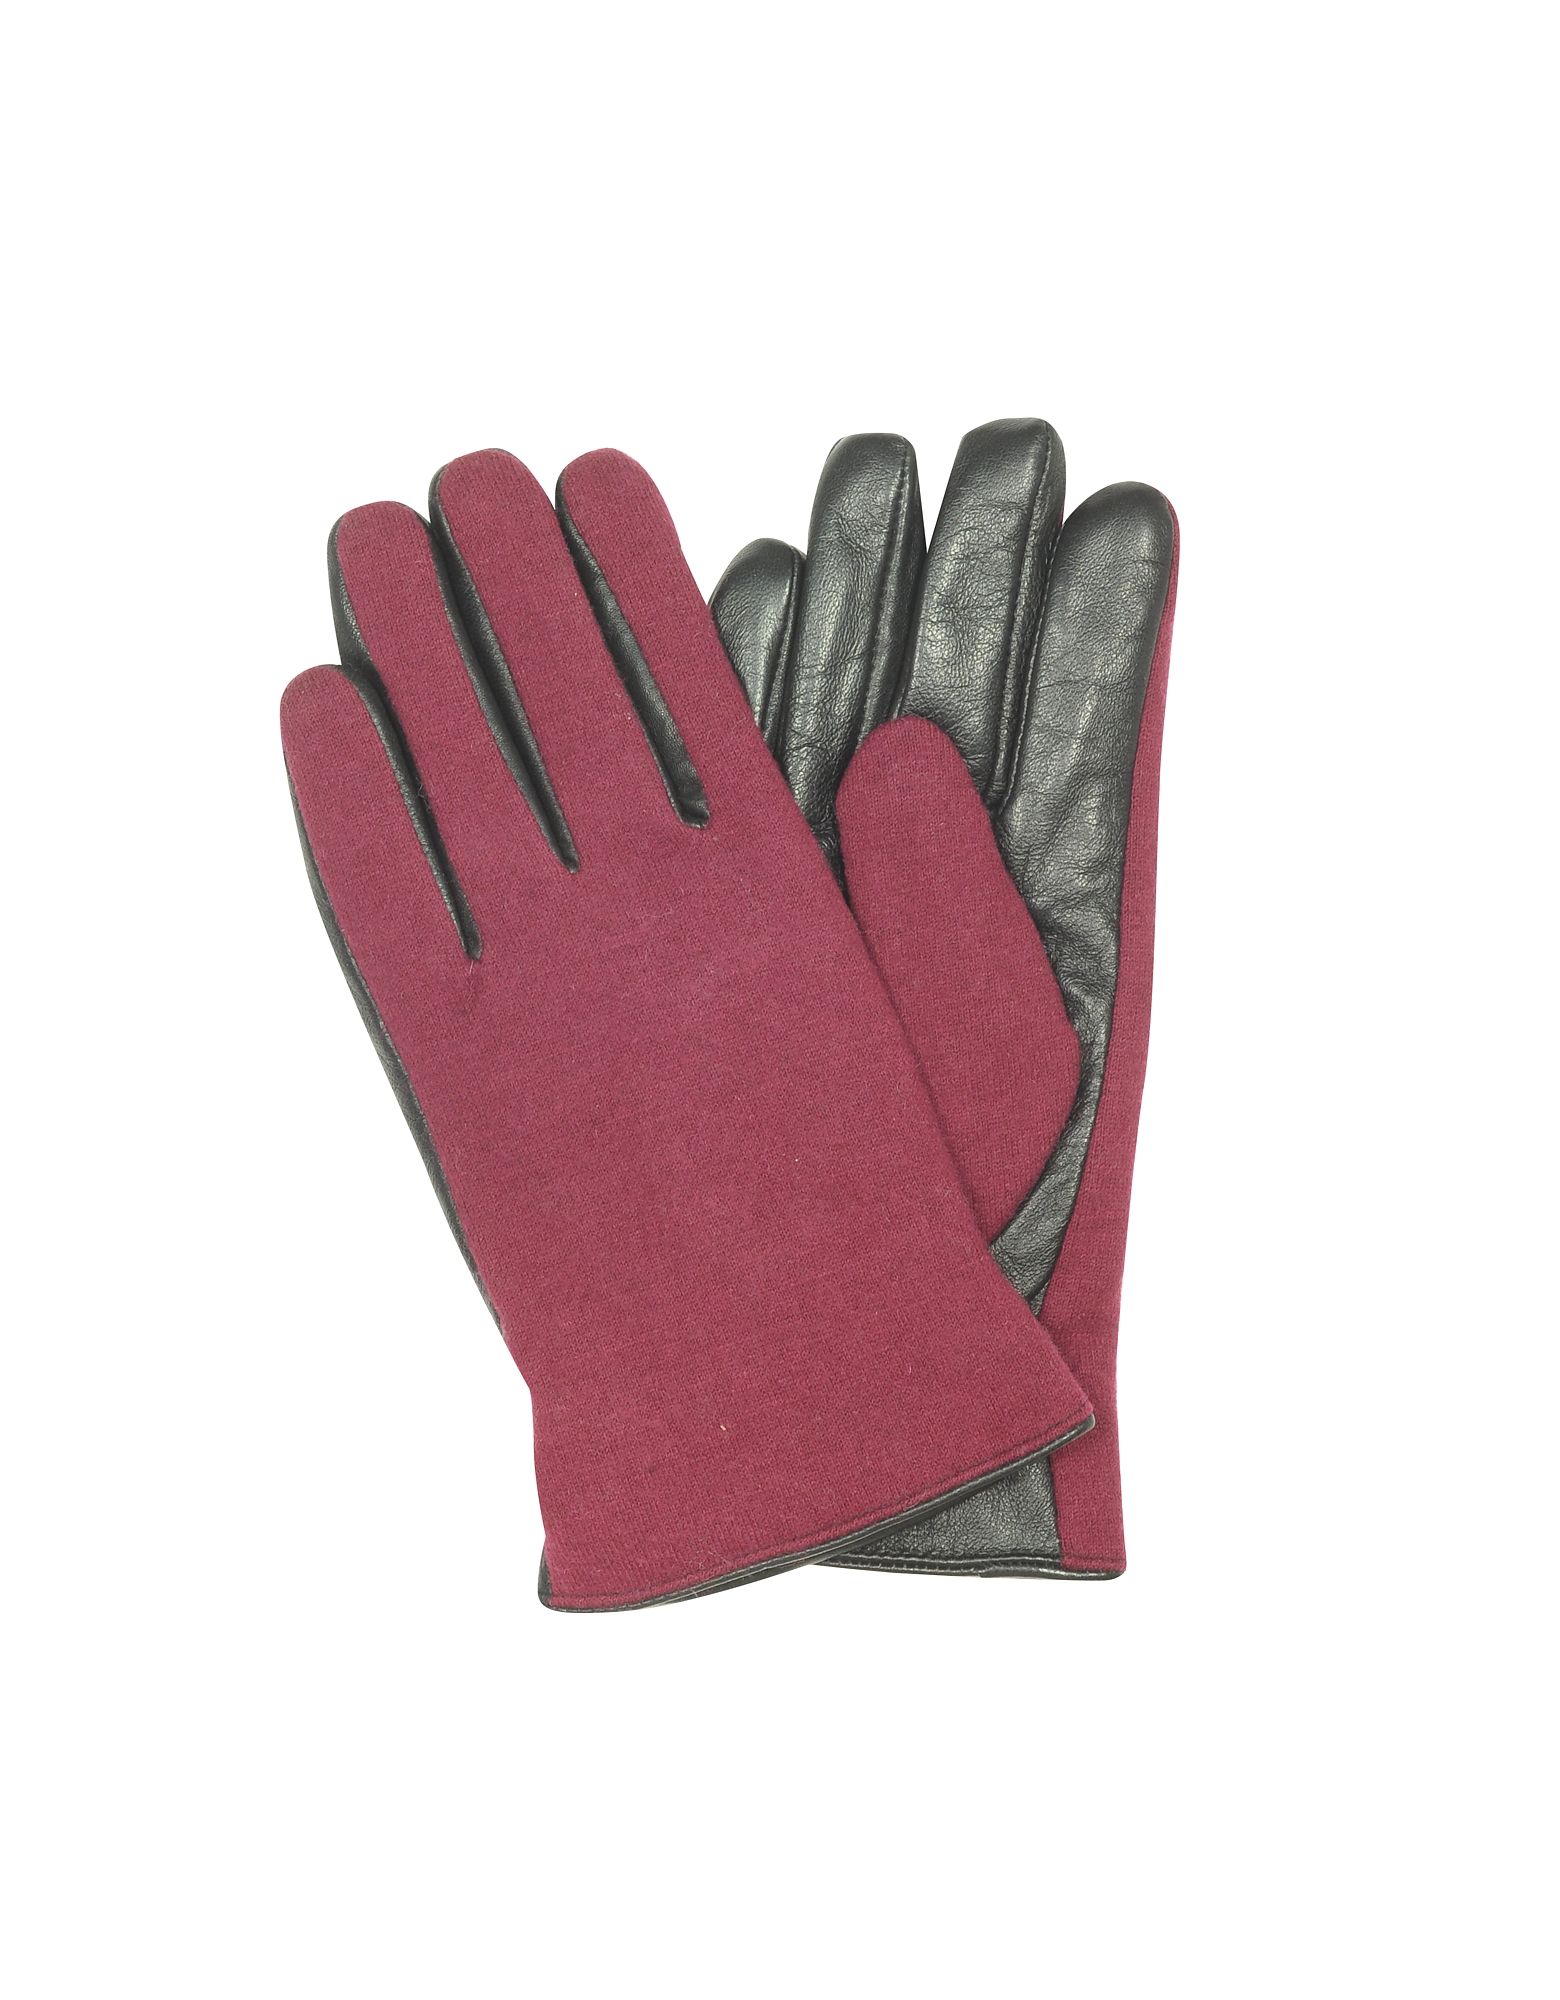 Forzieri Women's Gloves Black Leather & Burgundy Wool Women's Gloves